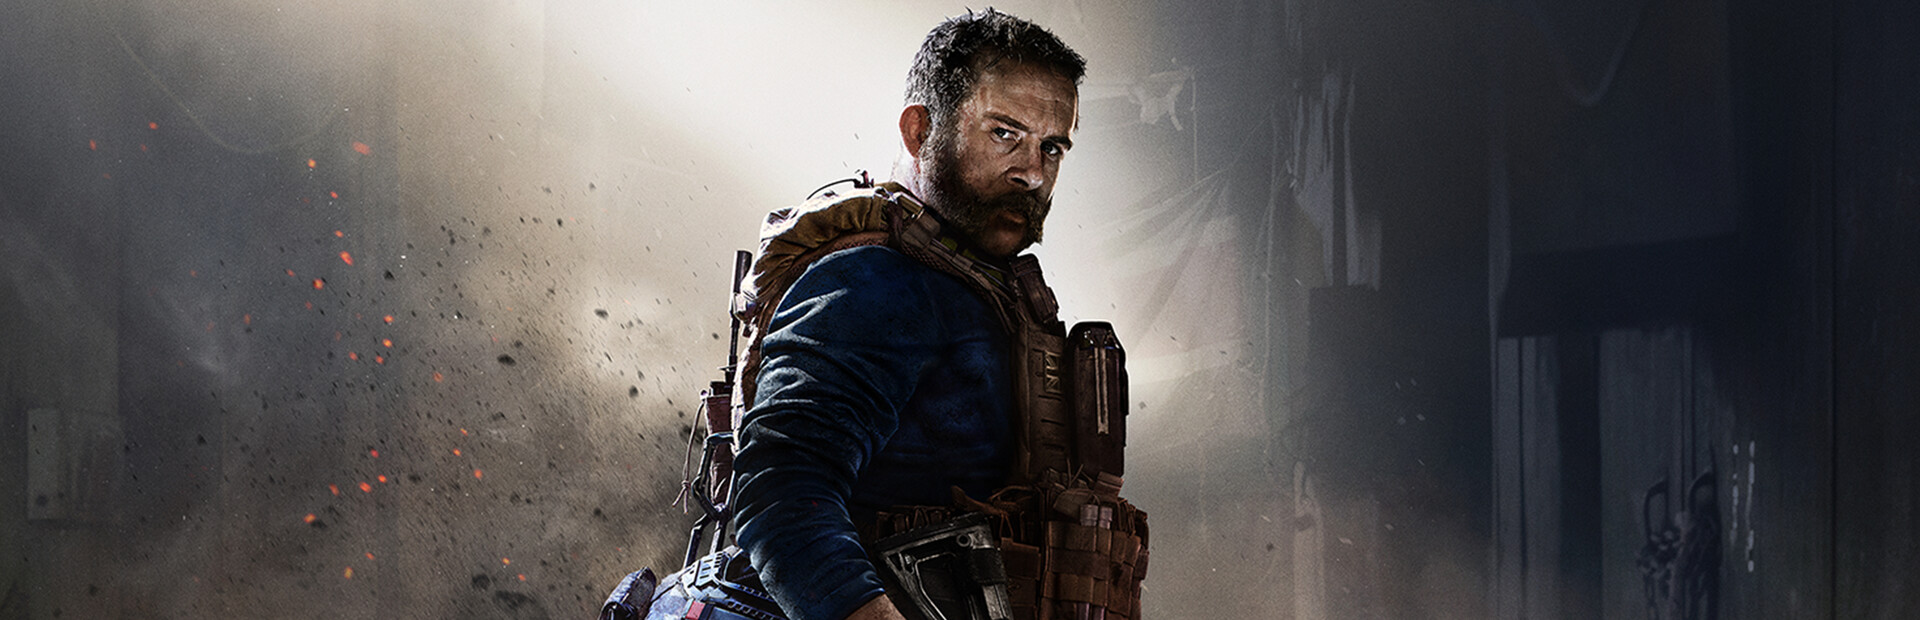 Call of Duty®: Modern Warfare® cover image